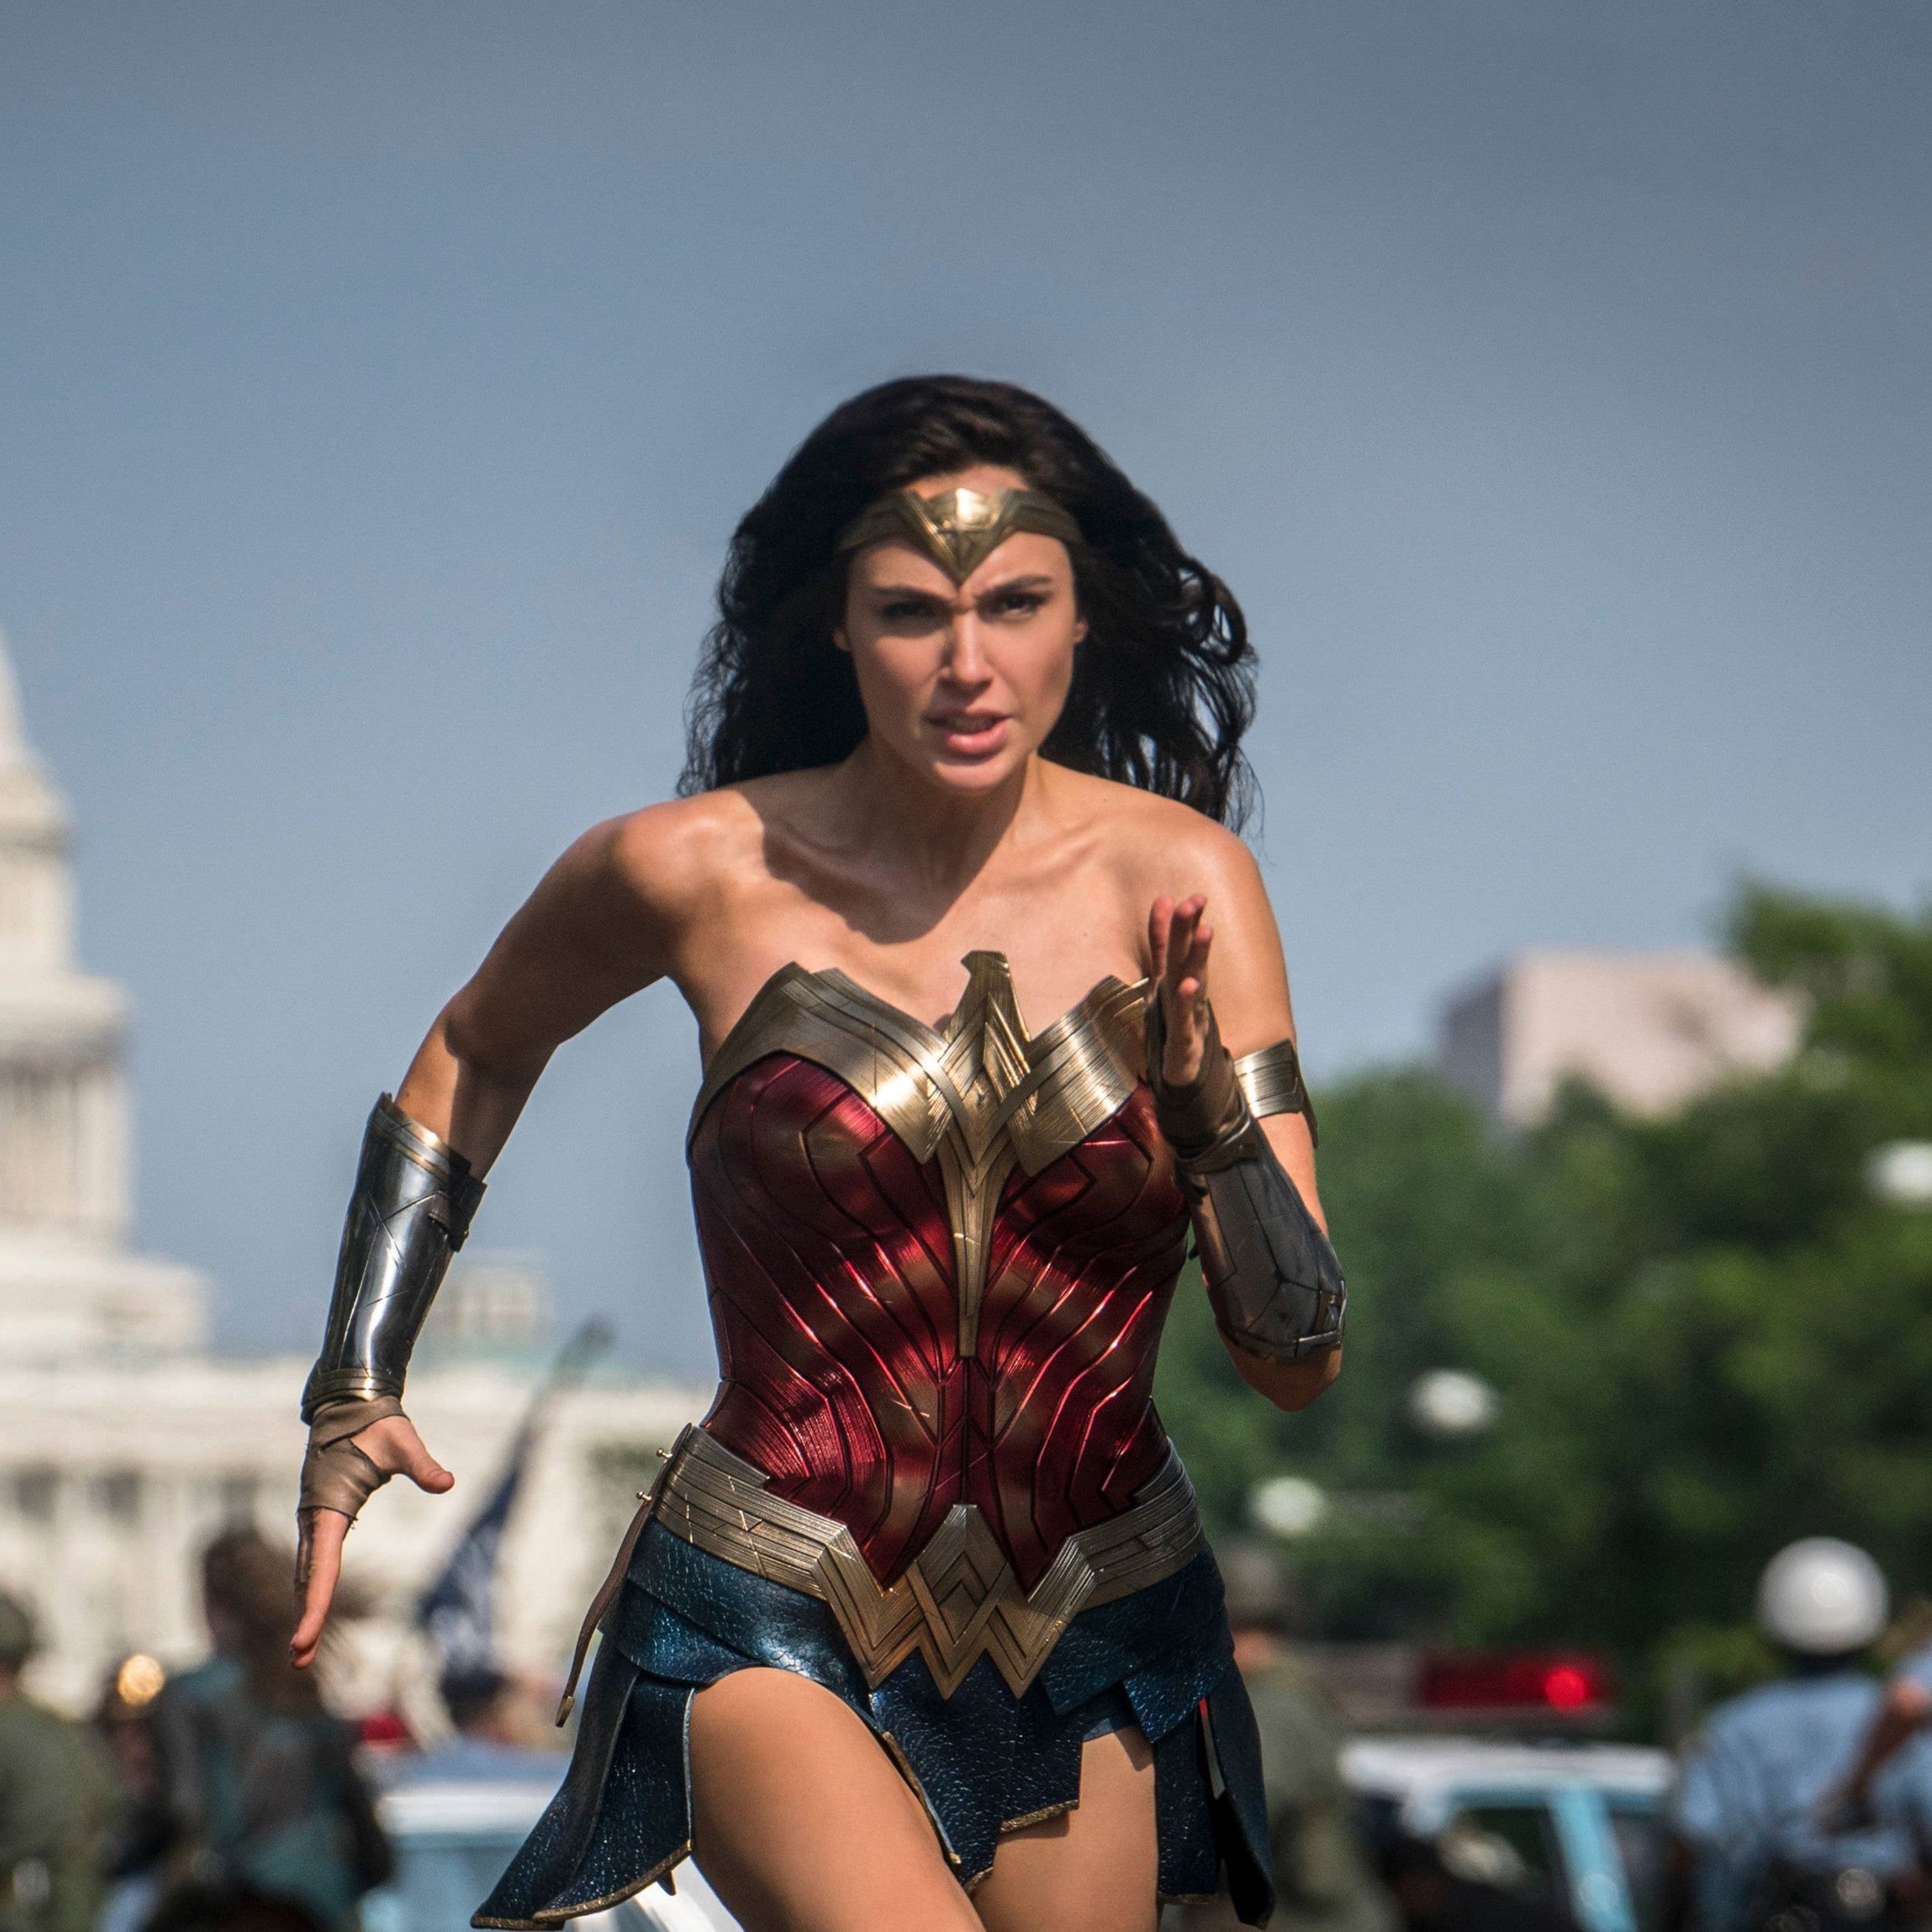 Women-only Wonder Woman showings sell out despite outcry, wonder